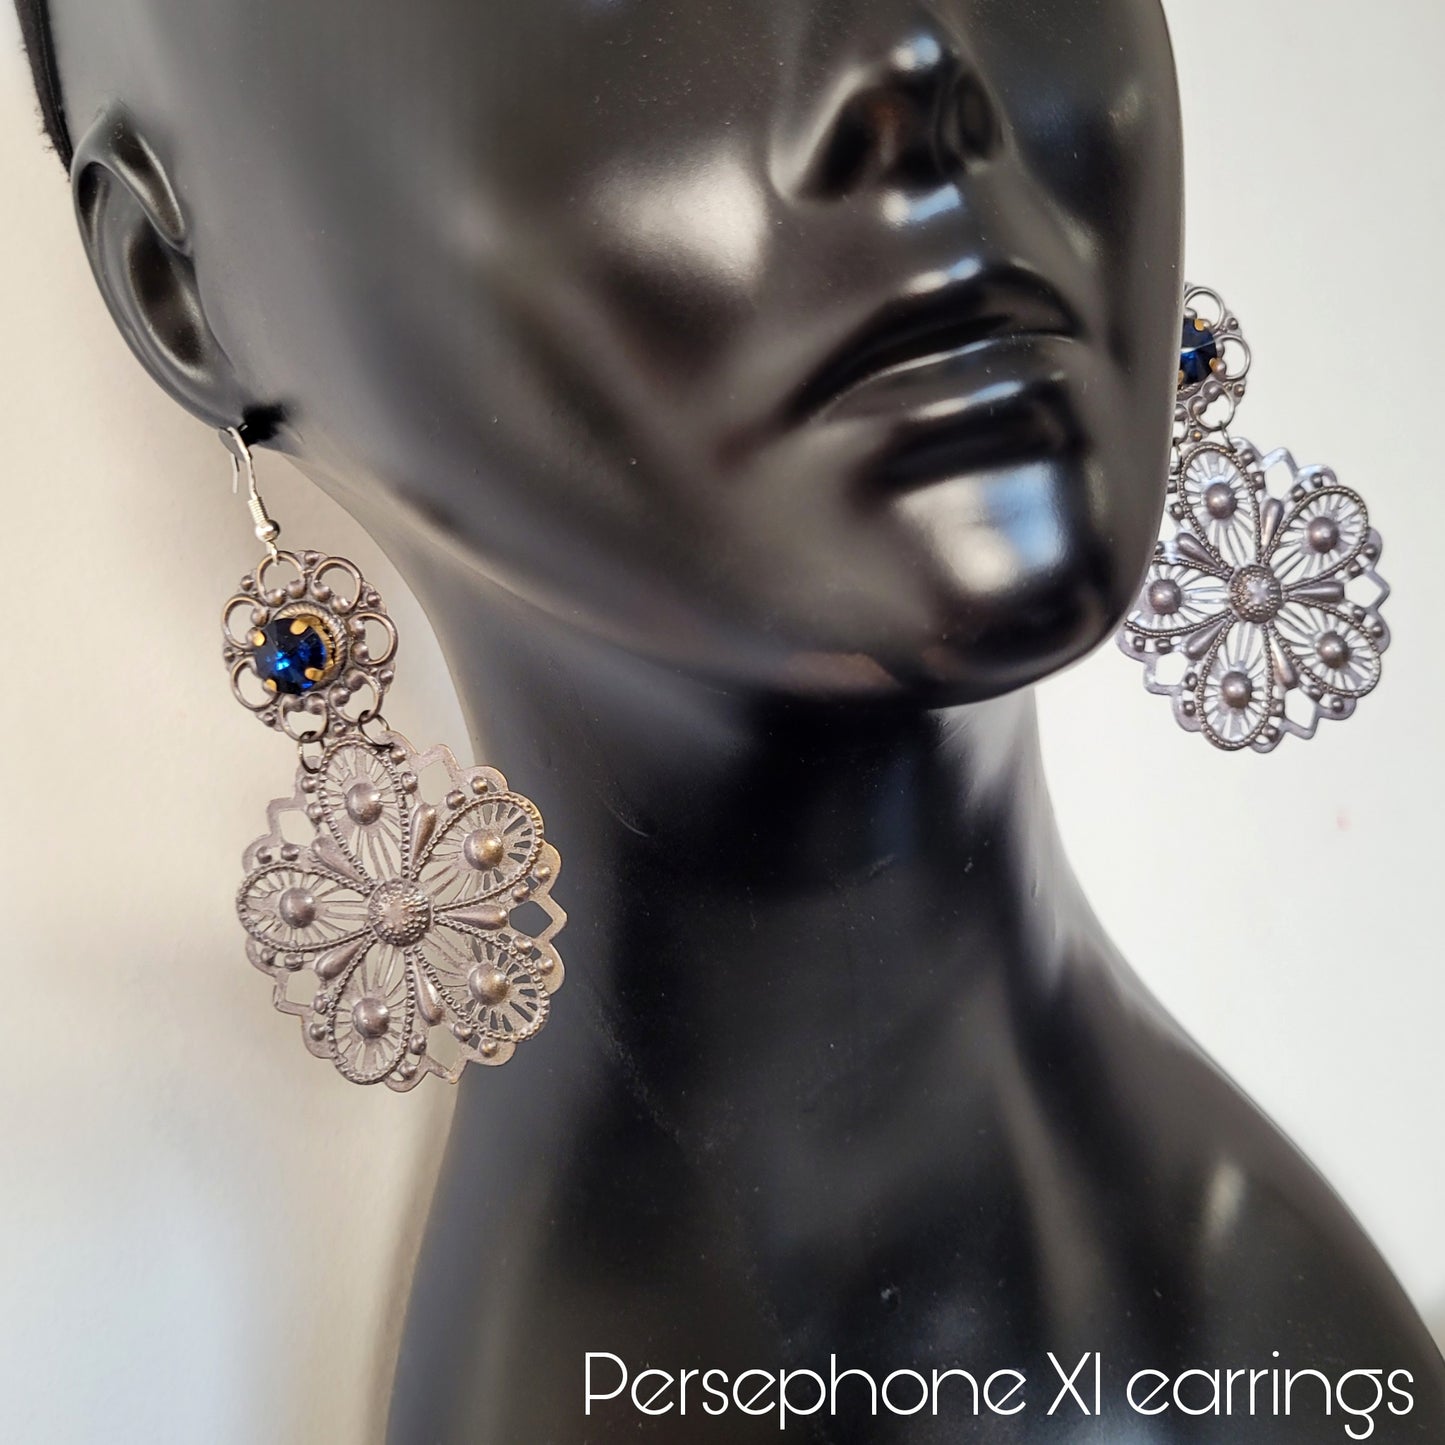 Deusa ex Machina collection: The Persephone earrings